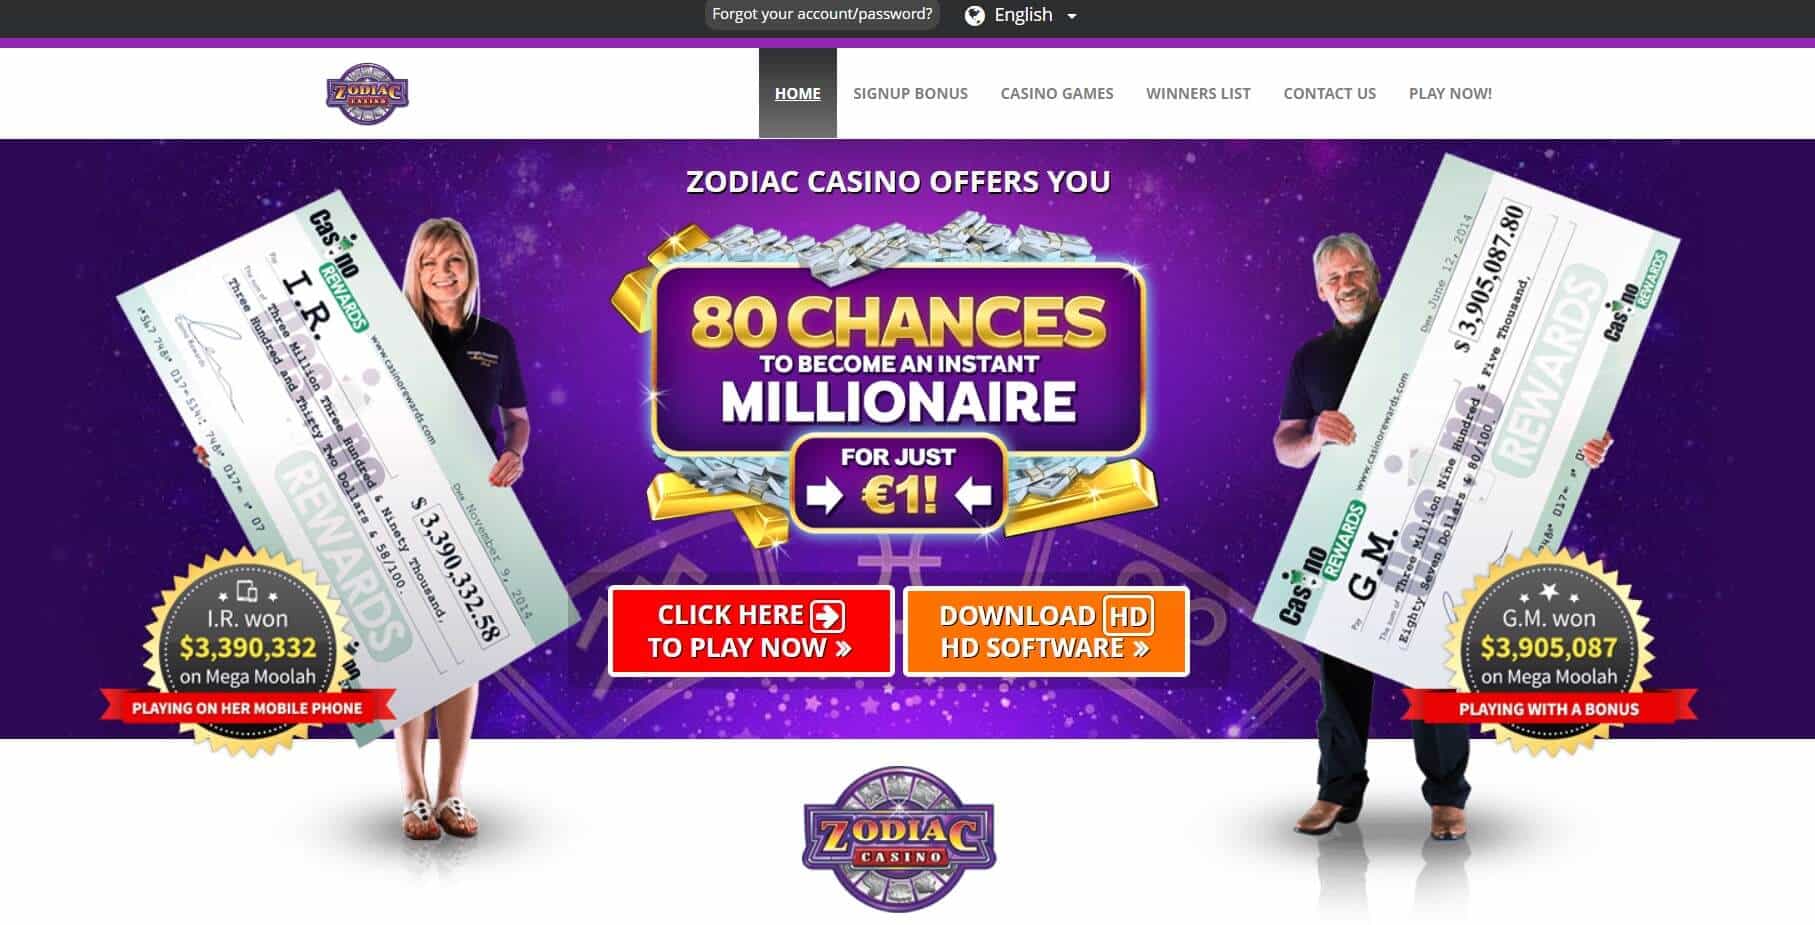 Zodiac casino homepage